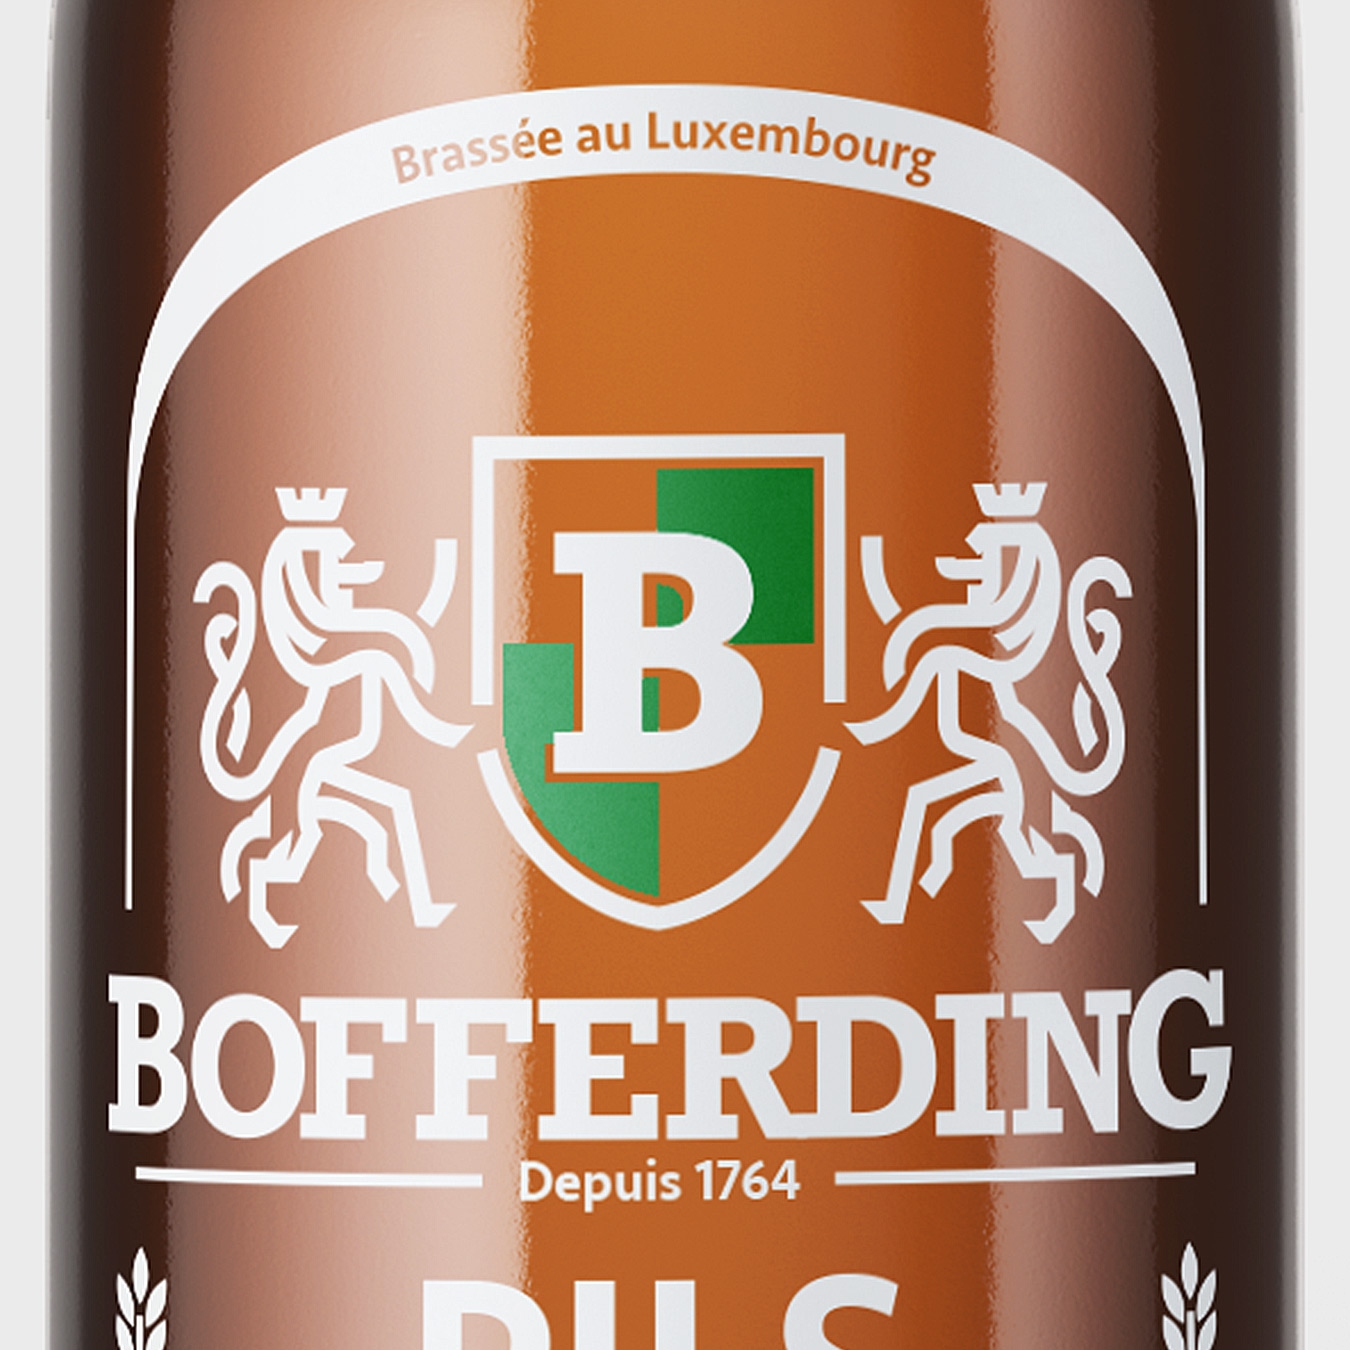 Bofferding beer bottle concept design closeup logo